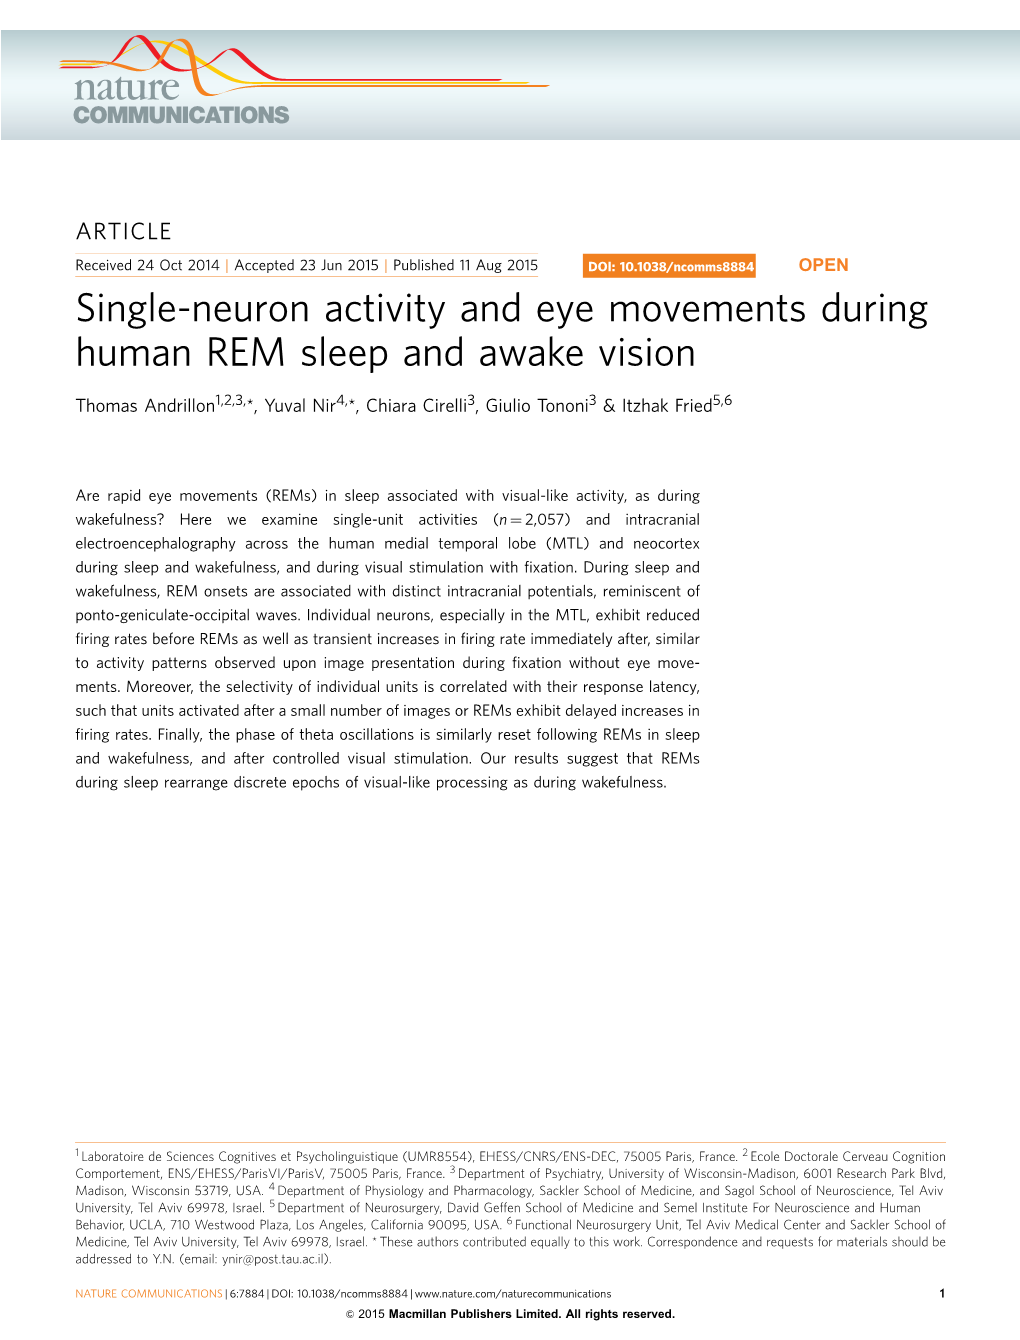 Single-Neuron Activity and Eye Movements During Human REM Sleep and Awake Vision